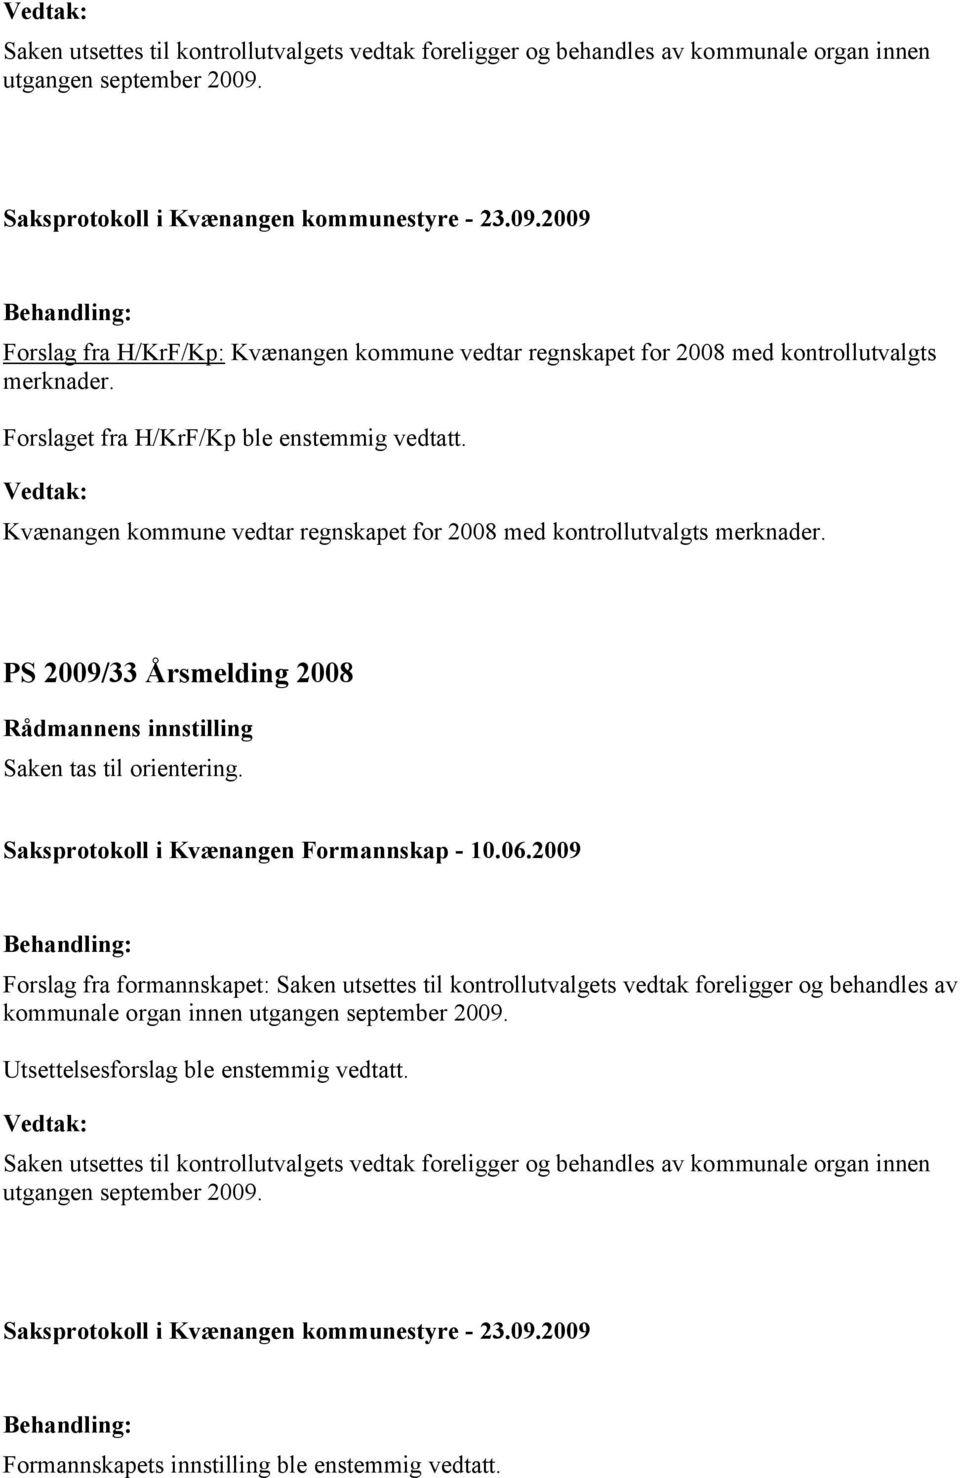 Kvænangen kommune vedtar regnskapet for 2008 med kontrollutvalgts merknader. PS 2009/33 Årsmelding 2008 Saken tas til orientering. Saksprotokoll i Kvænangen Formannskap - 10.06.